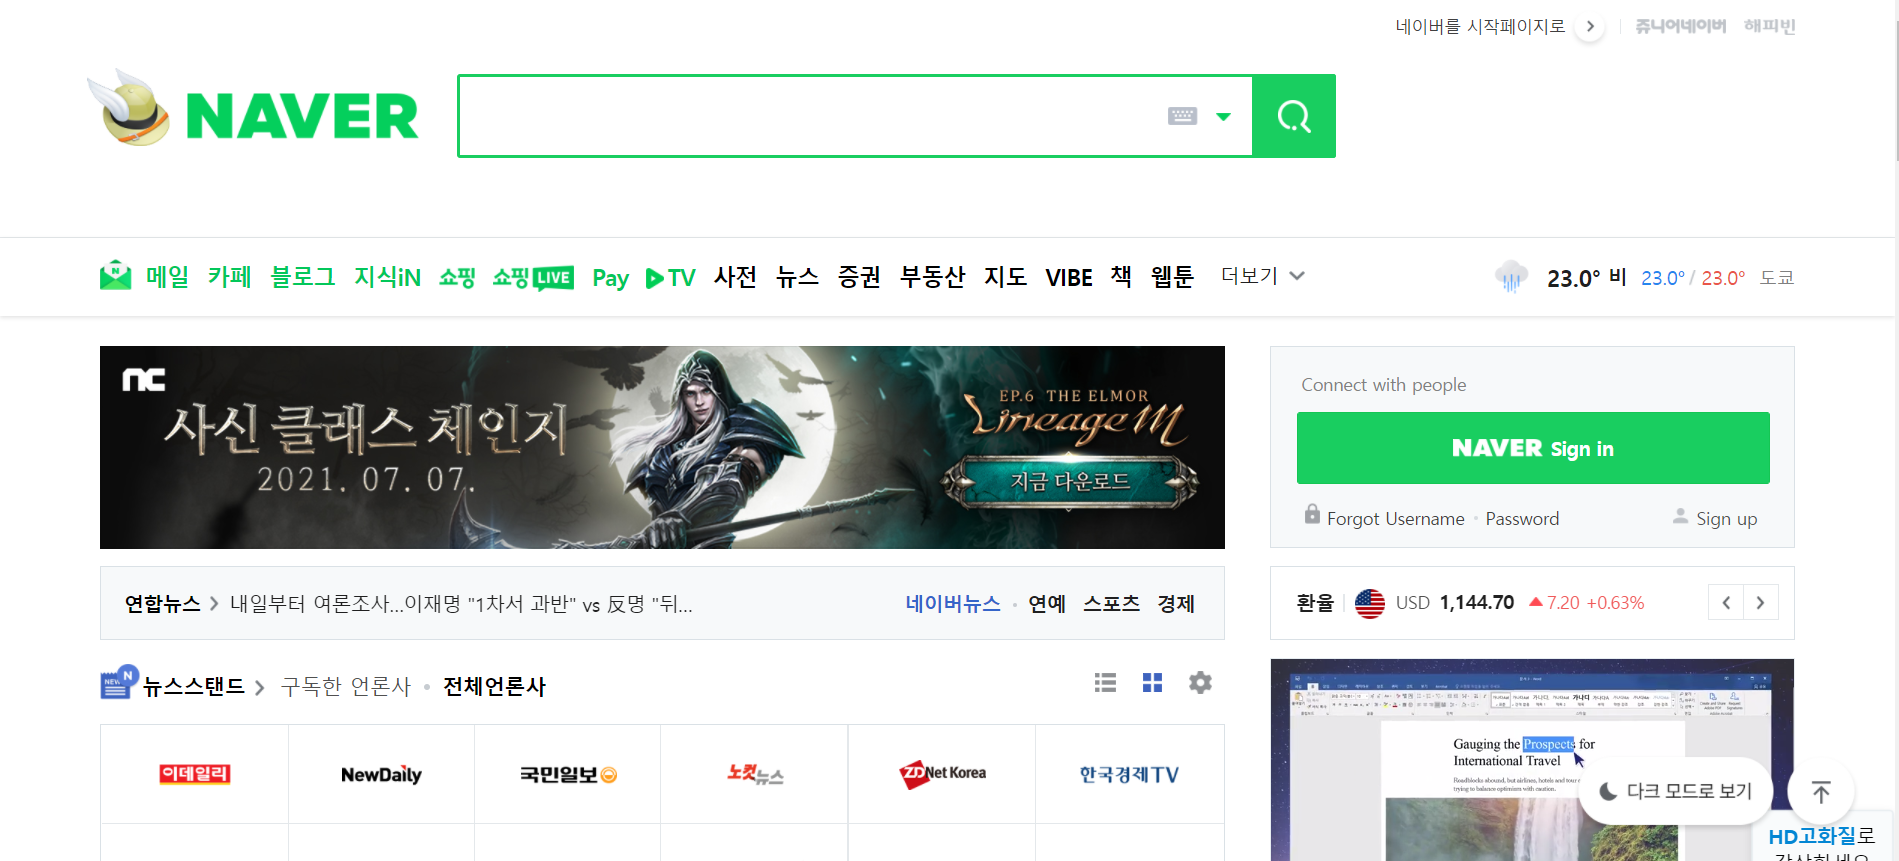 Screen capture of Korean search engine Naver website homepage